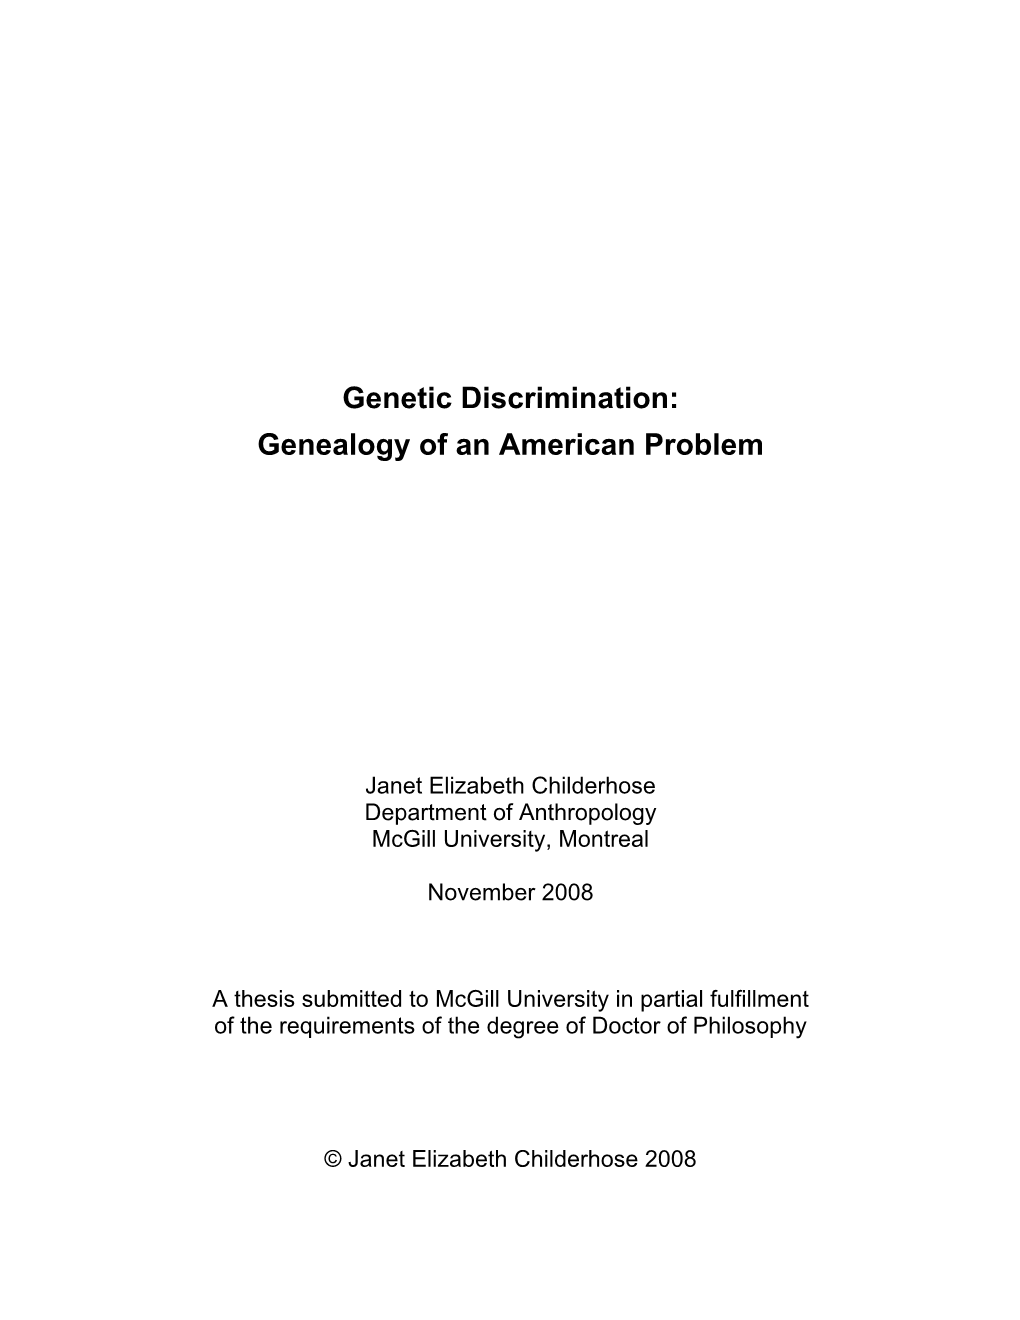 Genetic Discrimination: Genealogy of an American Problem